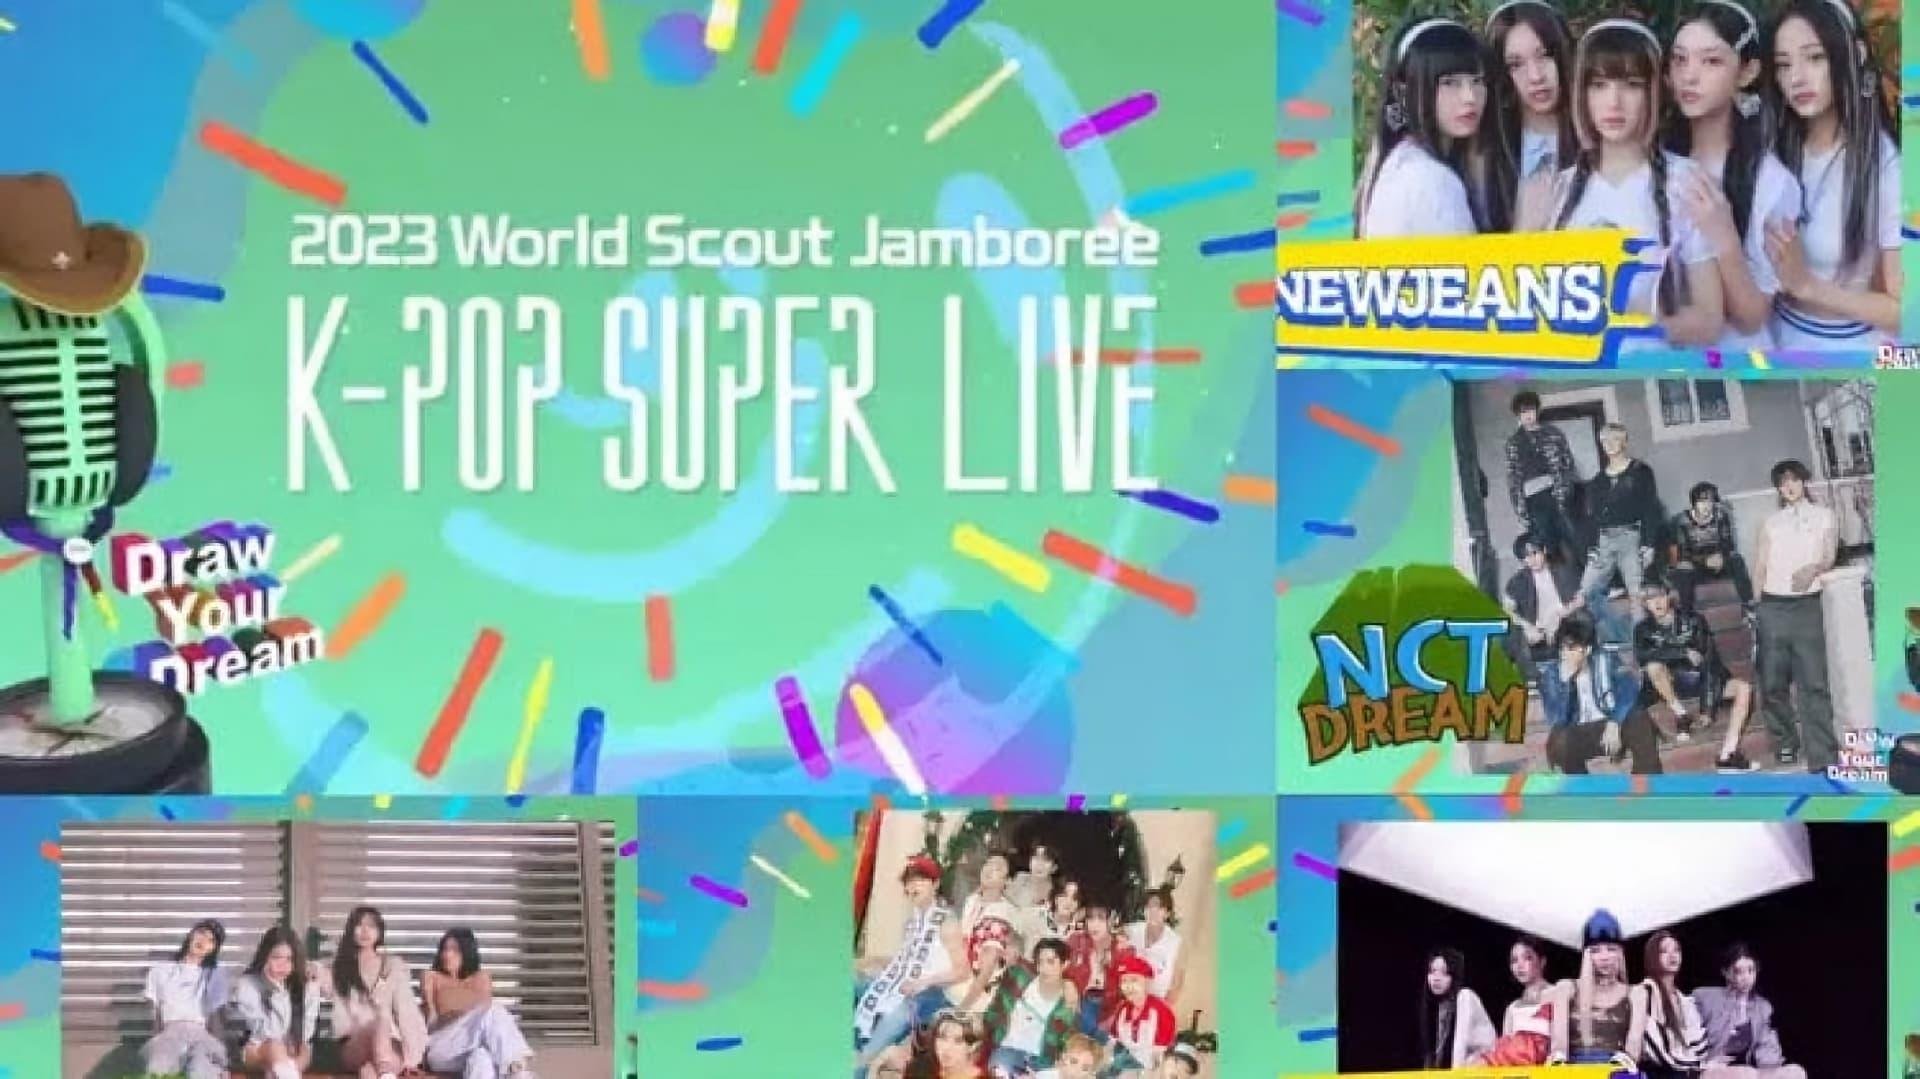 2023 World Scout Jamboree "K-Pop Super Live" Concert backdrop